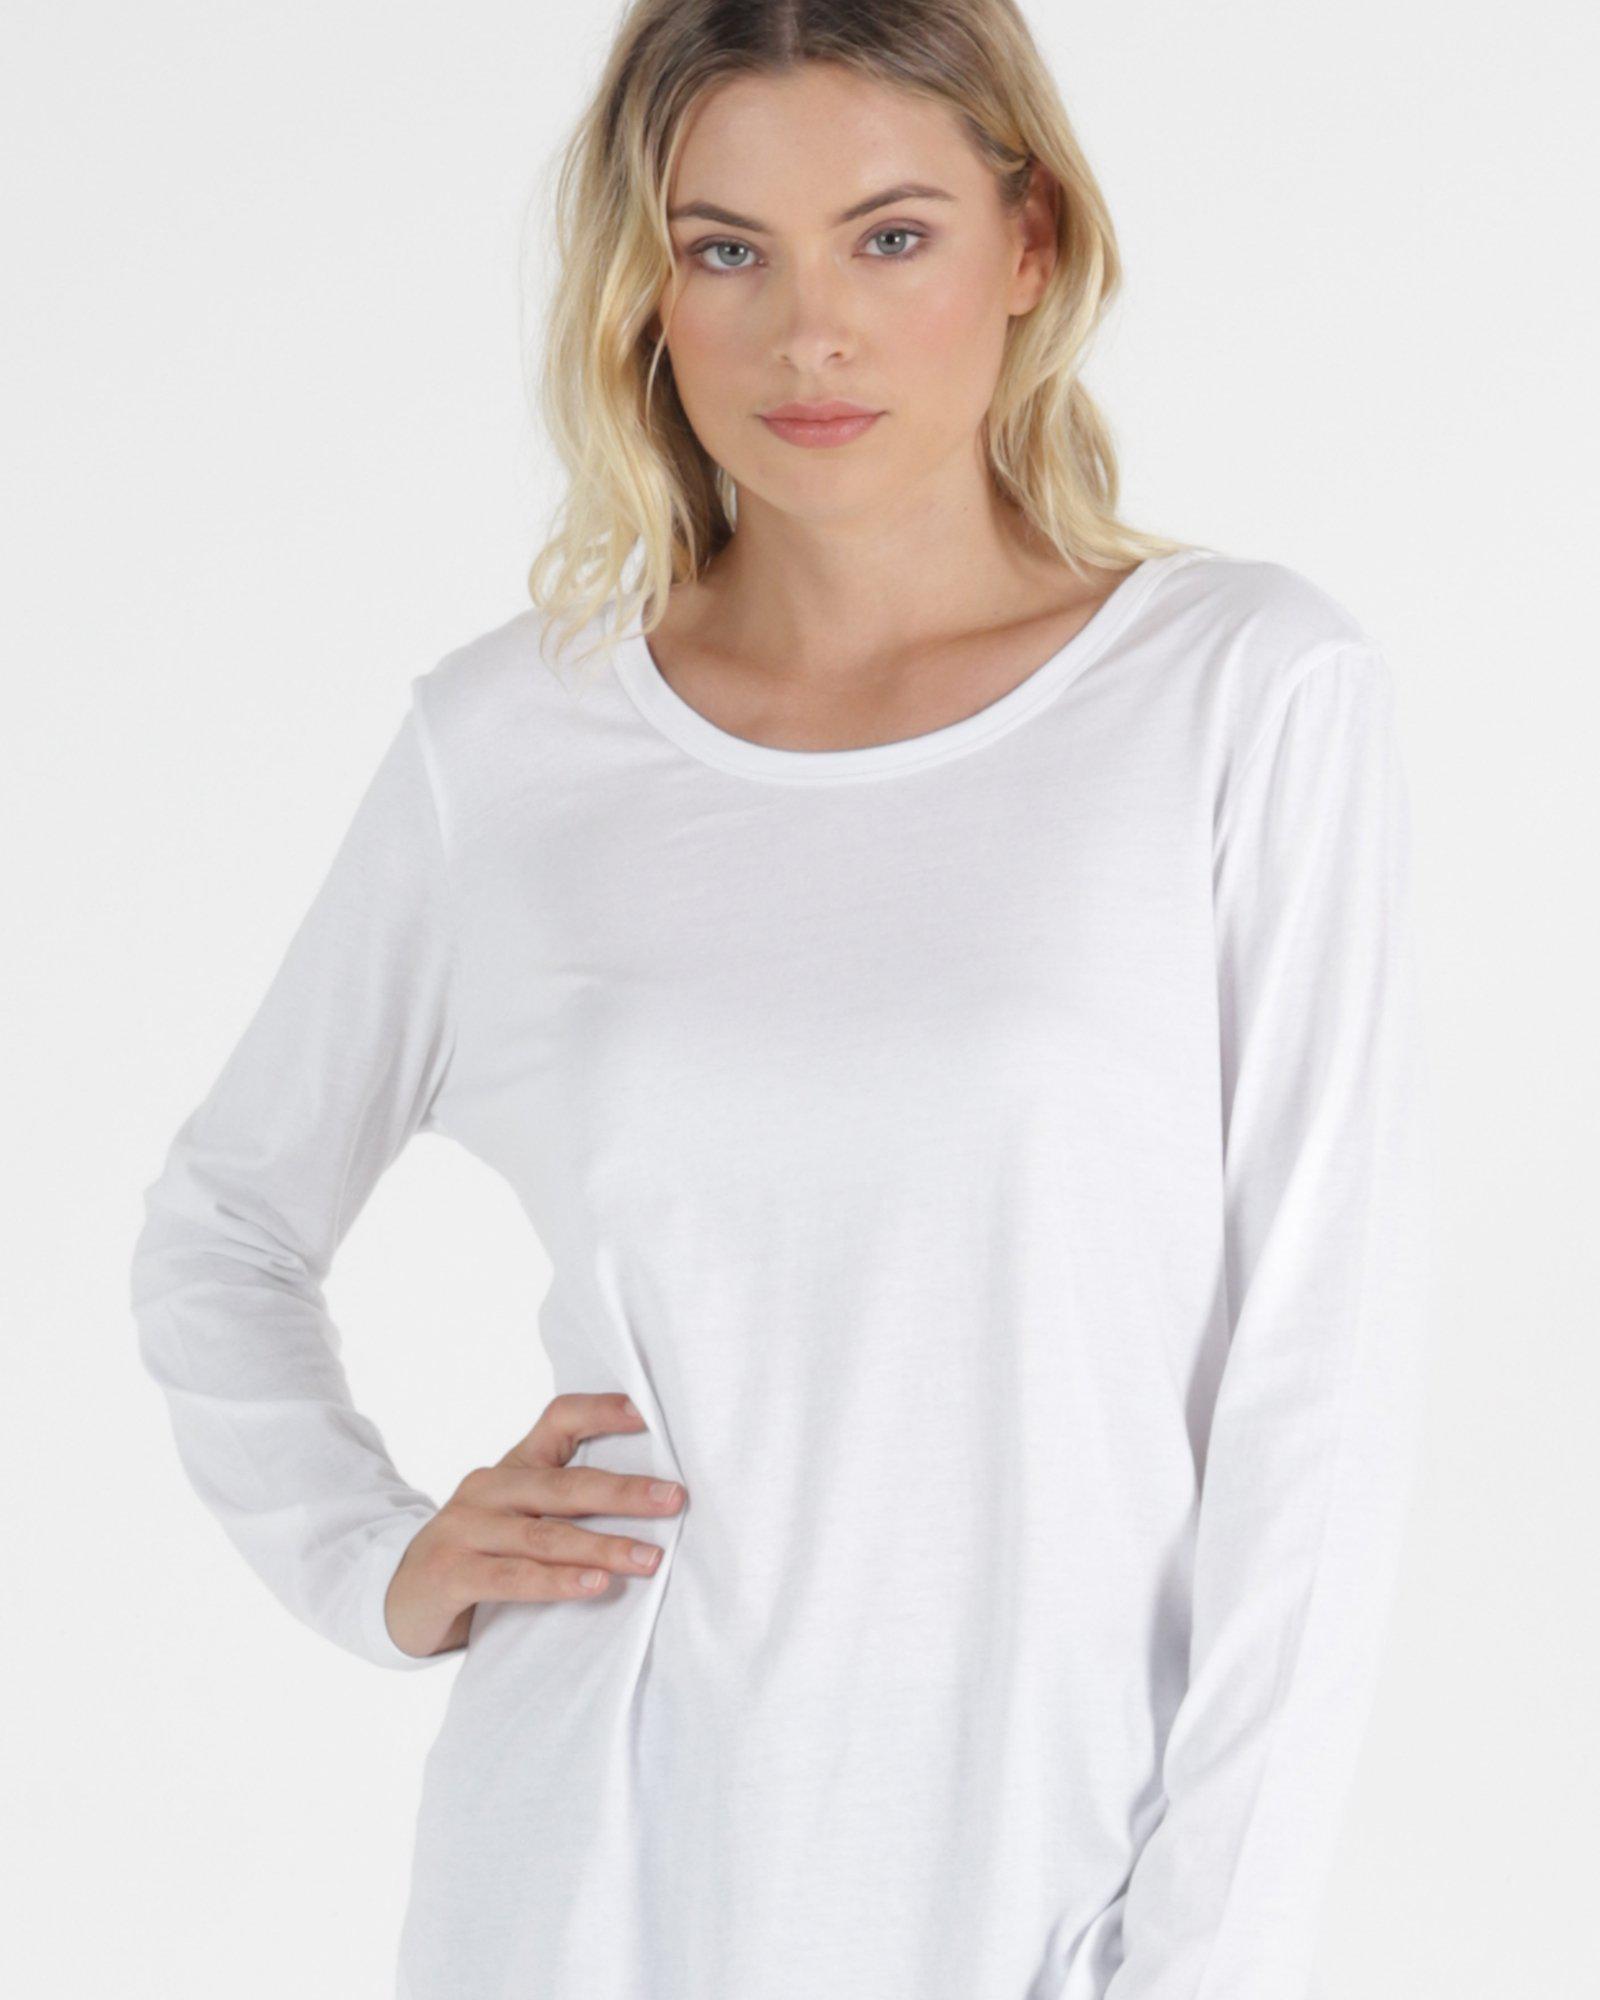 Megan Long Sleeve Top - White - Betty Basics - FUDGE Gifts Home Lifestyle